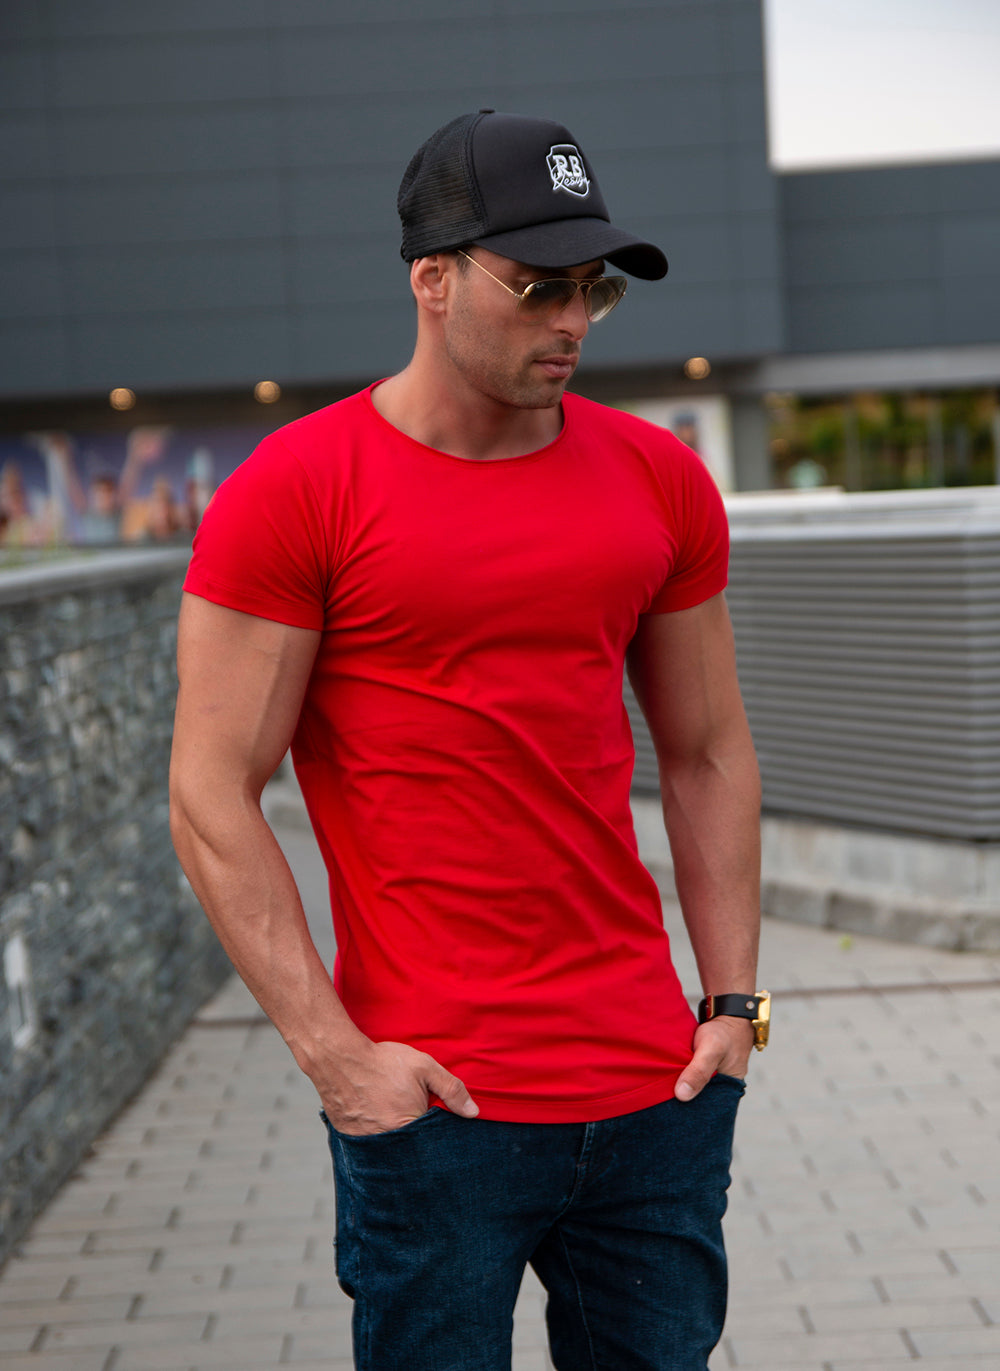 Men's Plain RED Round Neck T-shirt - Long Fit Tee